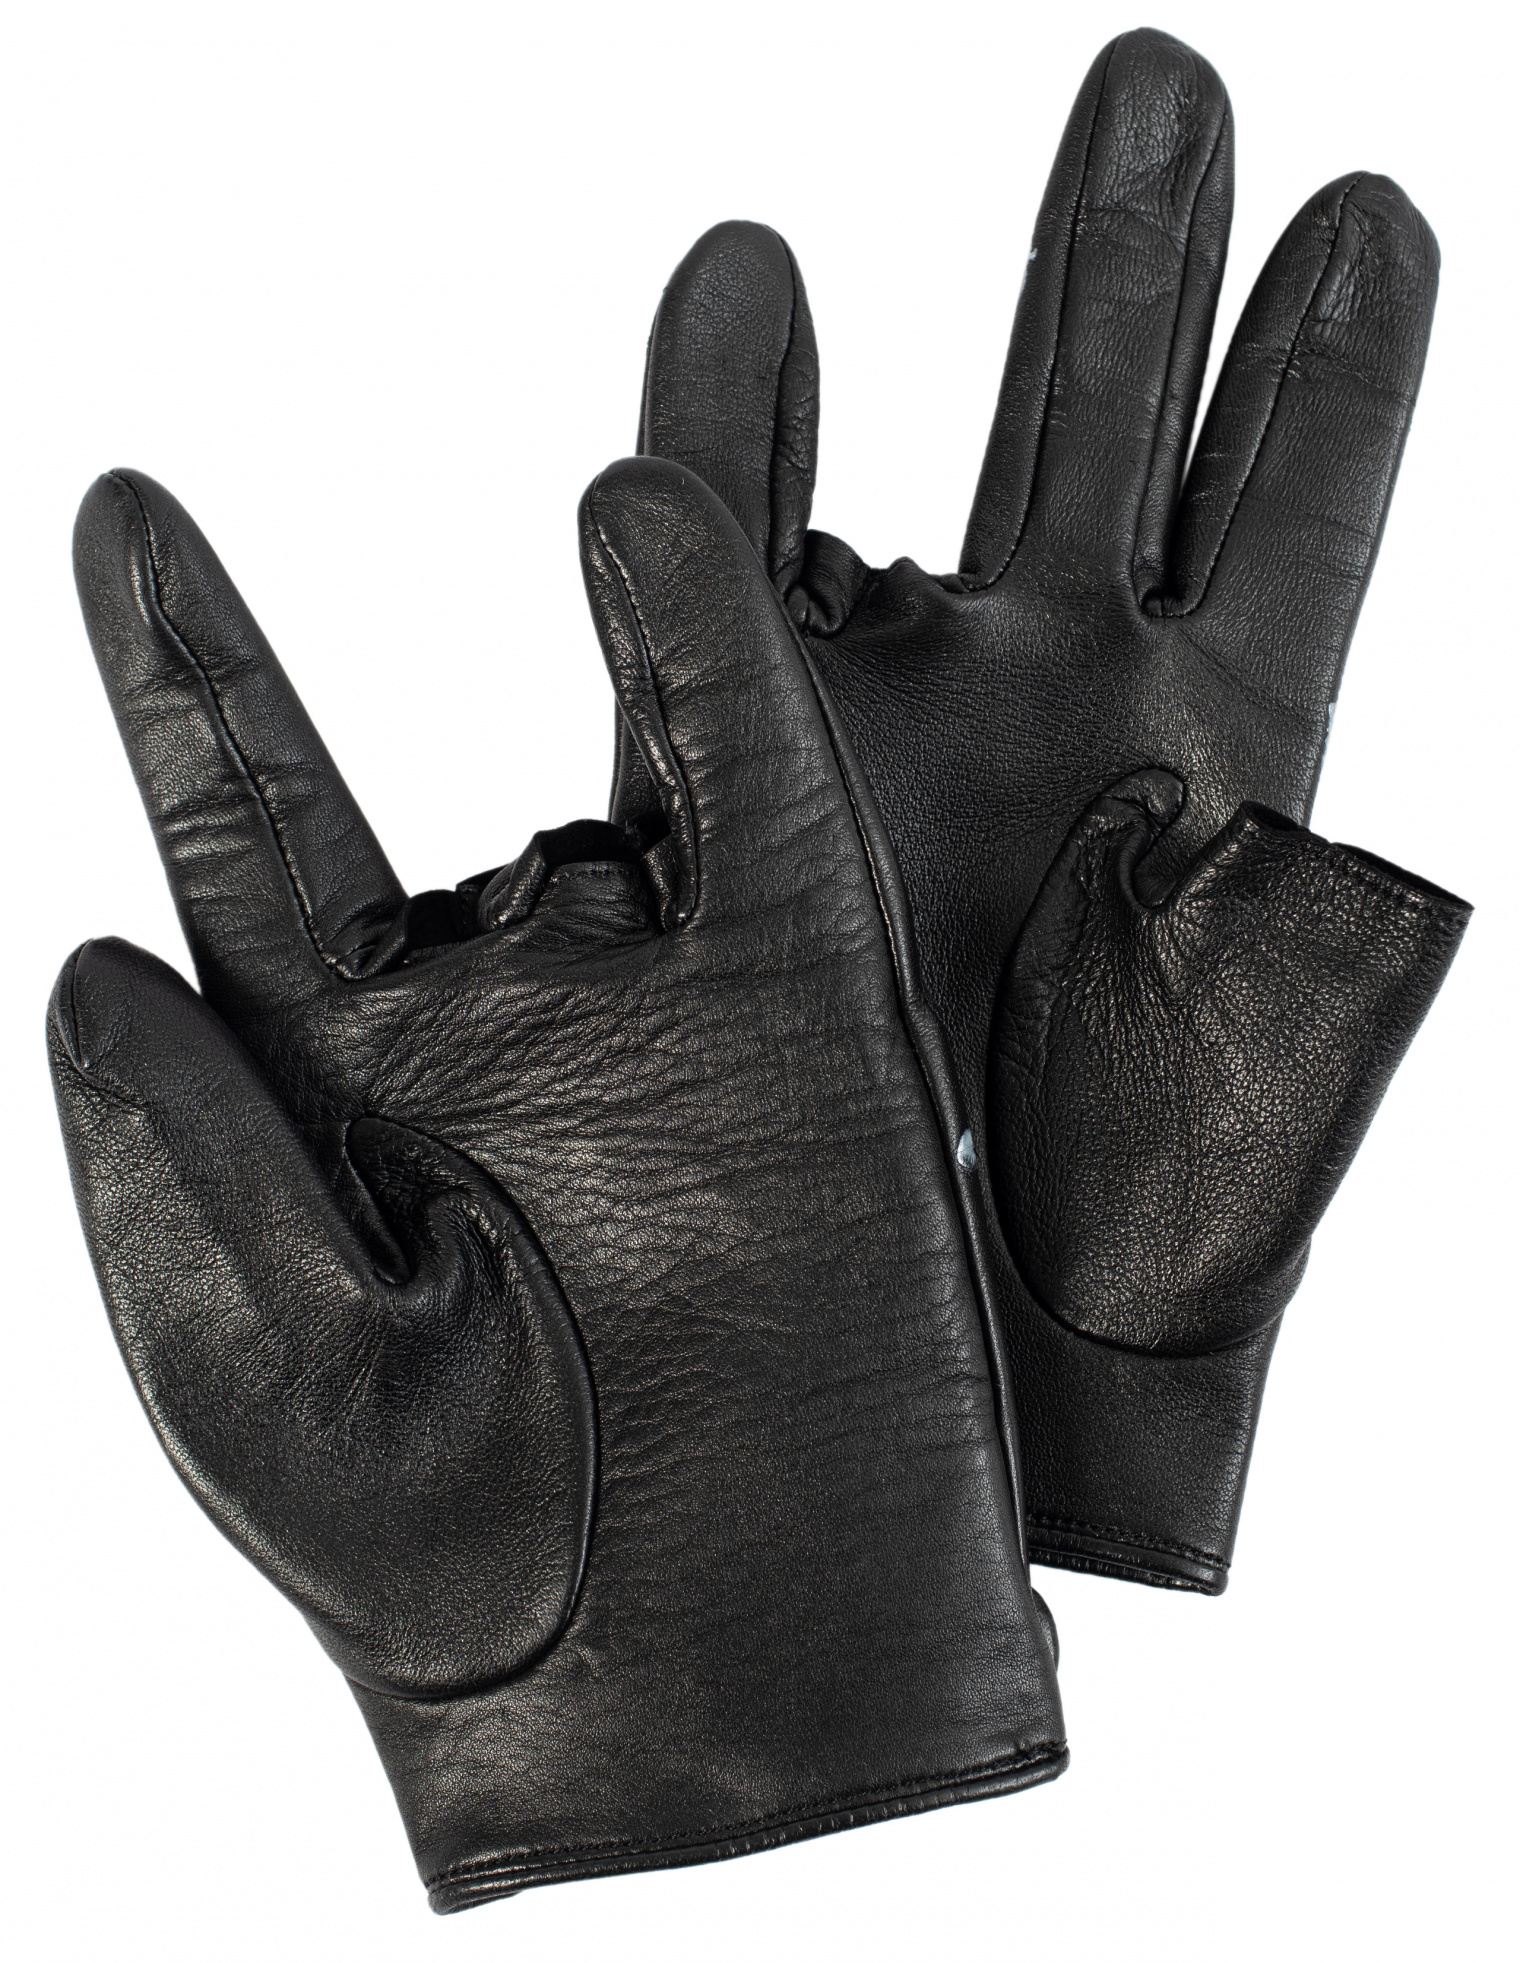 Yohji Yamamoto Black leather gloves with finger cut